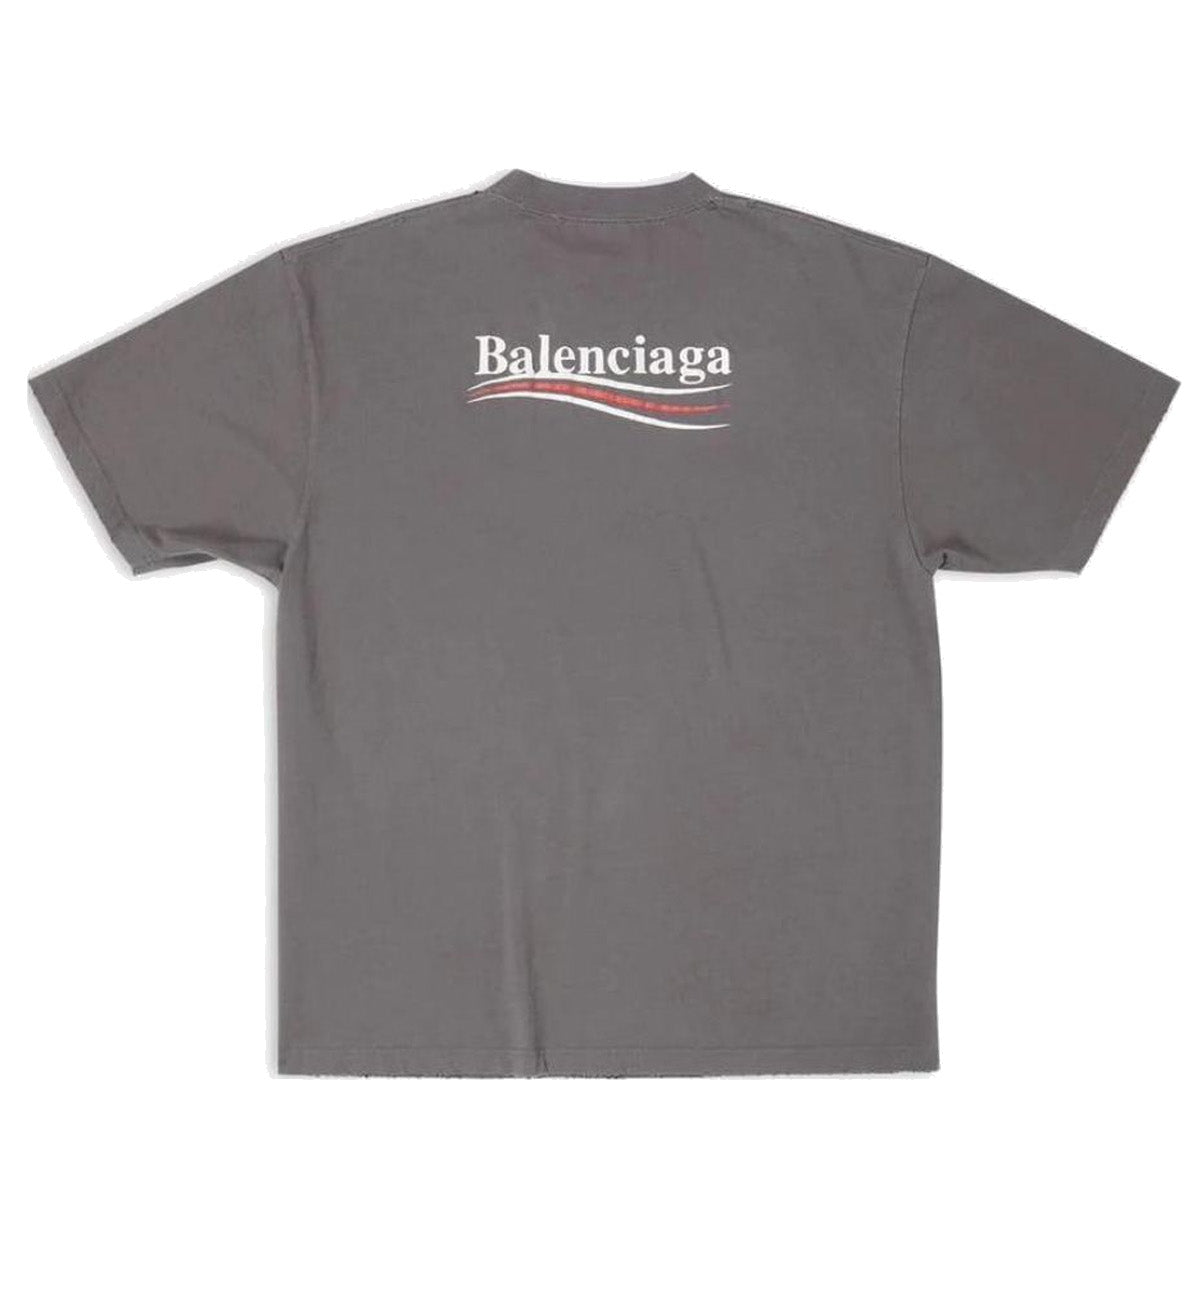 Balenciaga Embroidered T-Shirt (Grey)